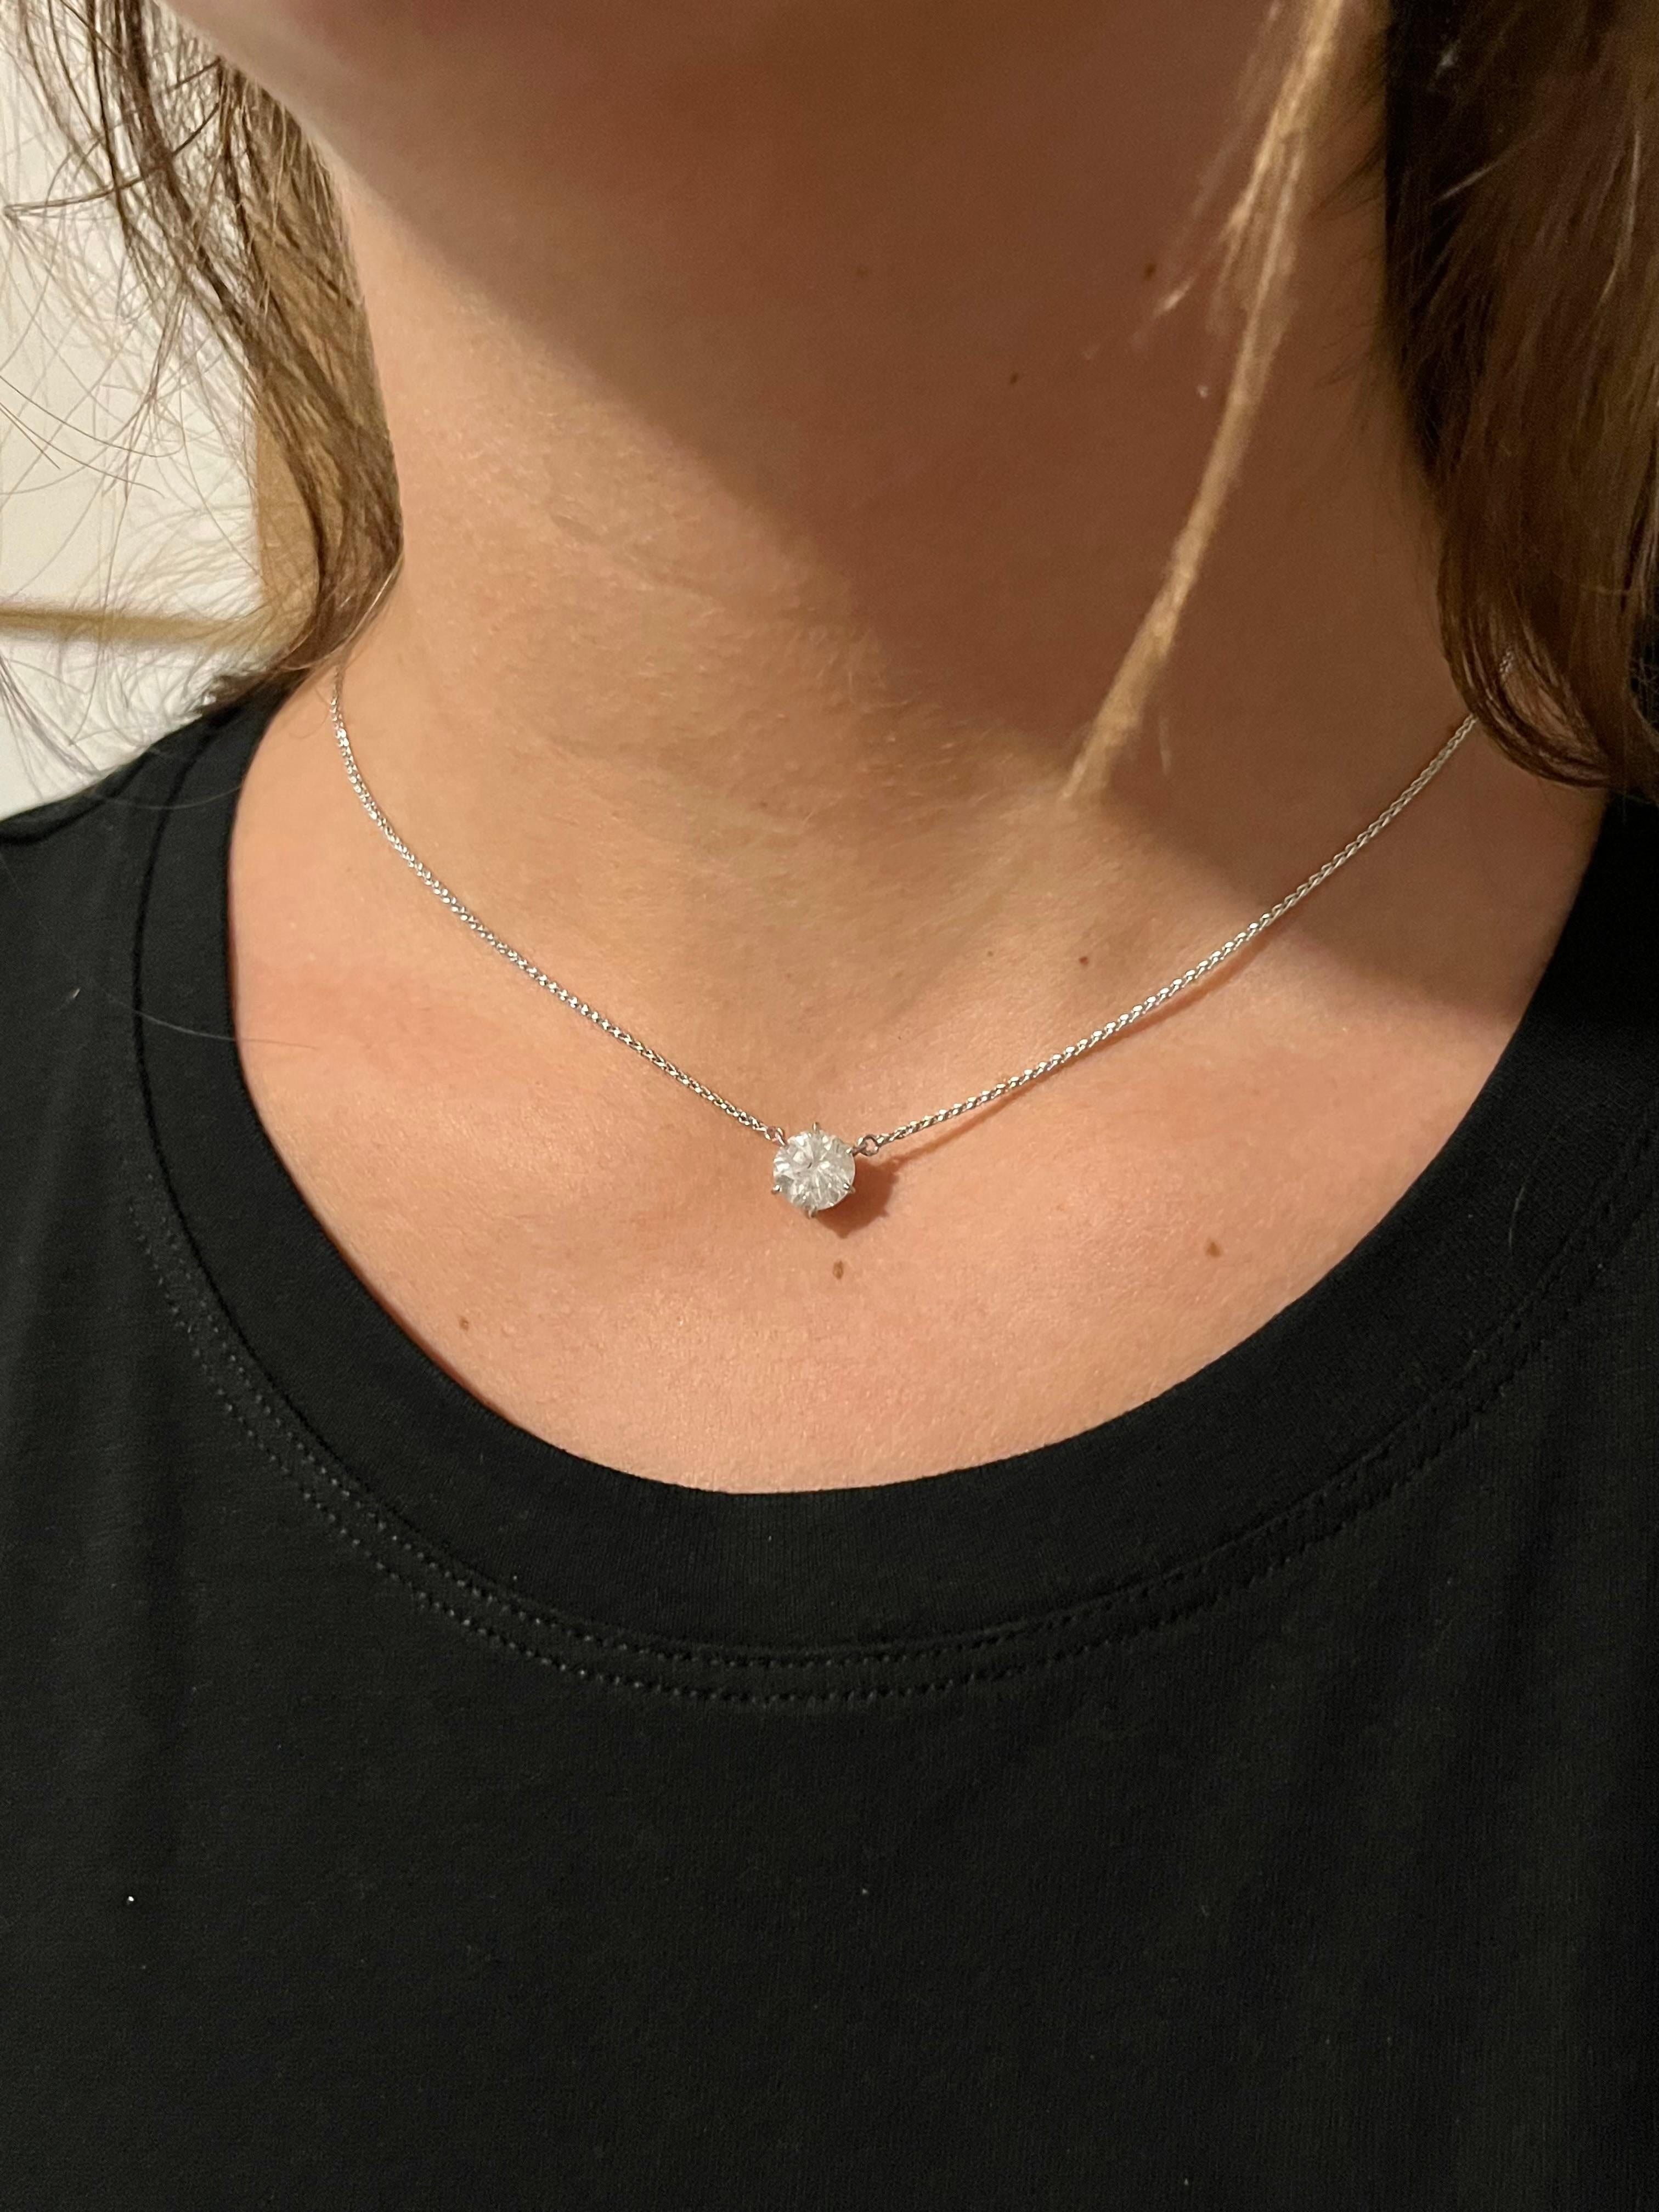 2 carat diamond necklace price